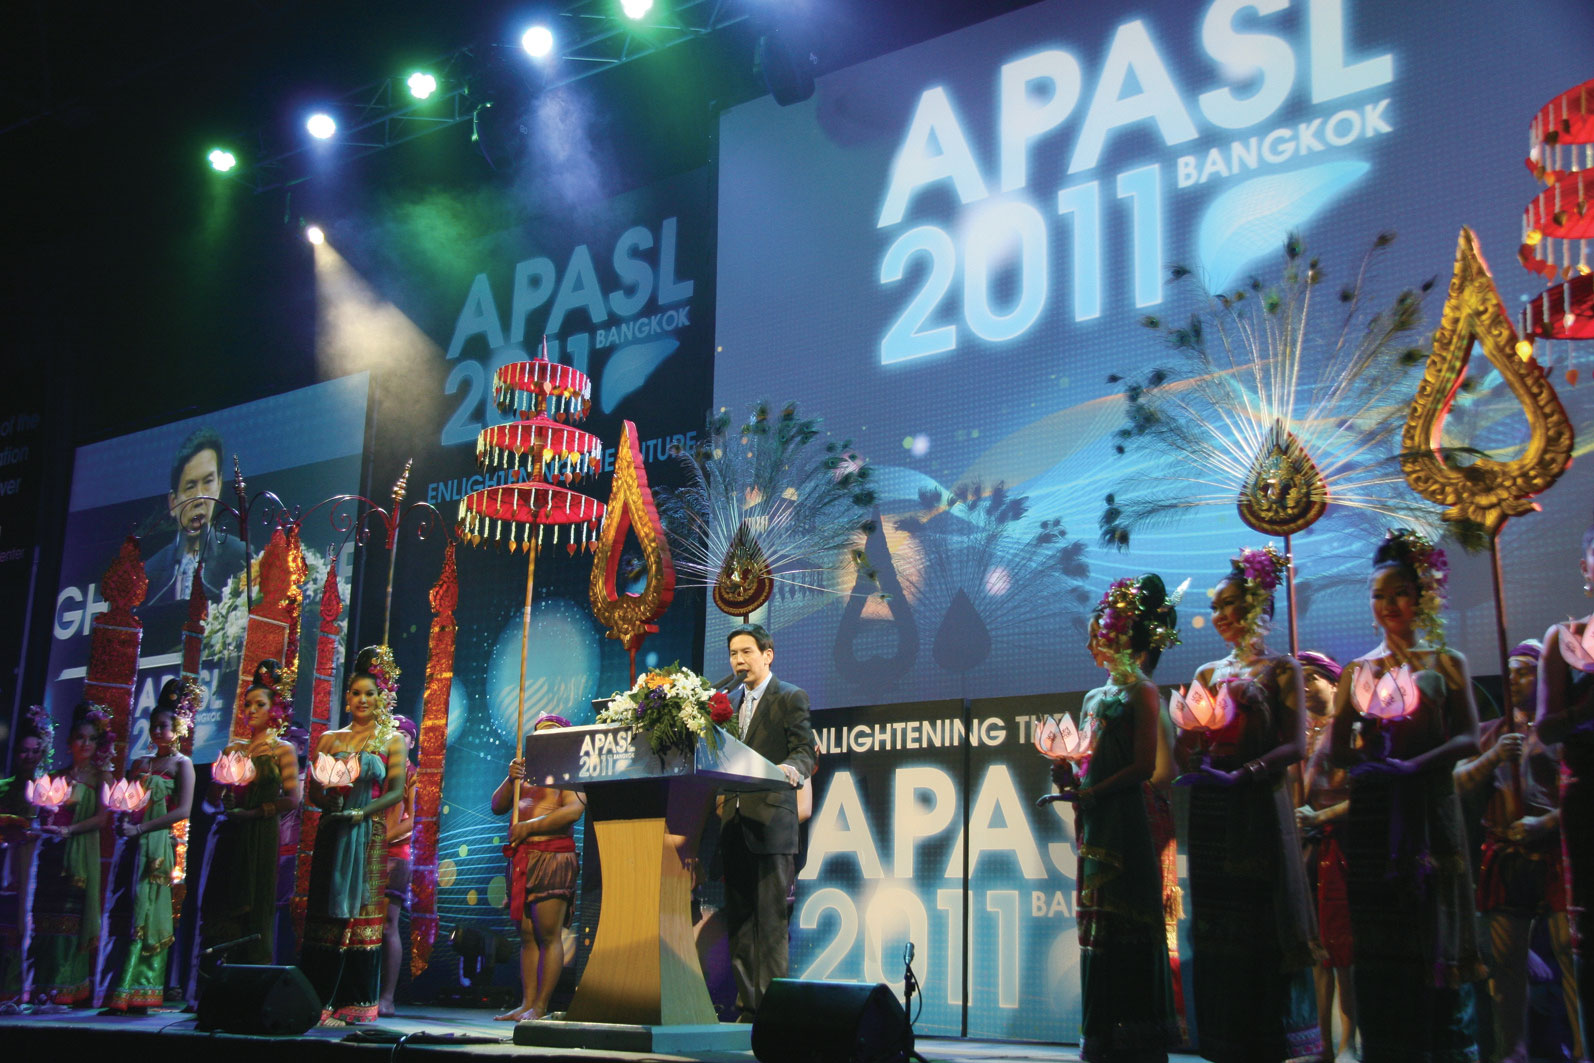 APASL2011：第21届亚太肝脏研究学会年会报道